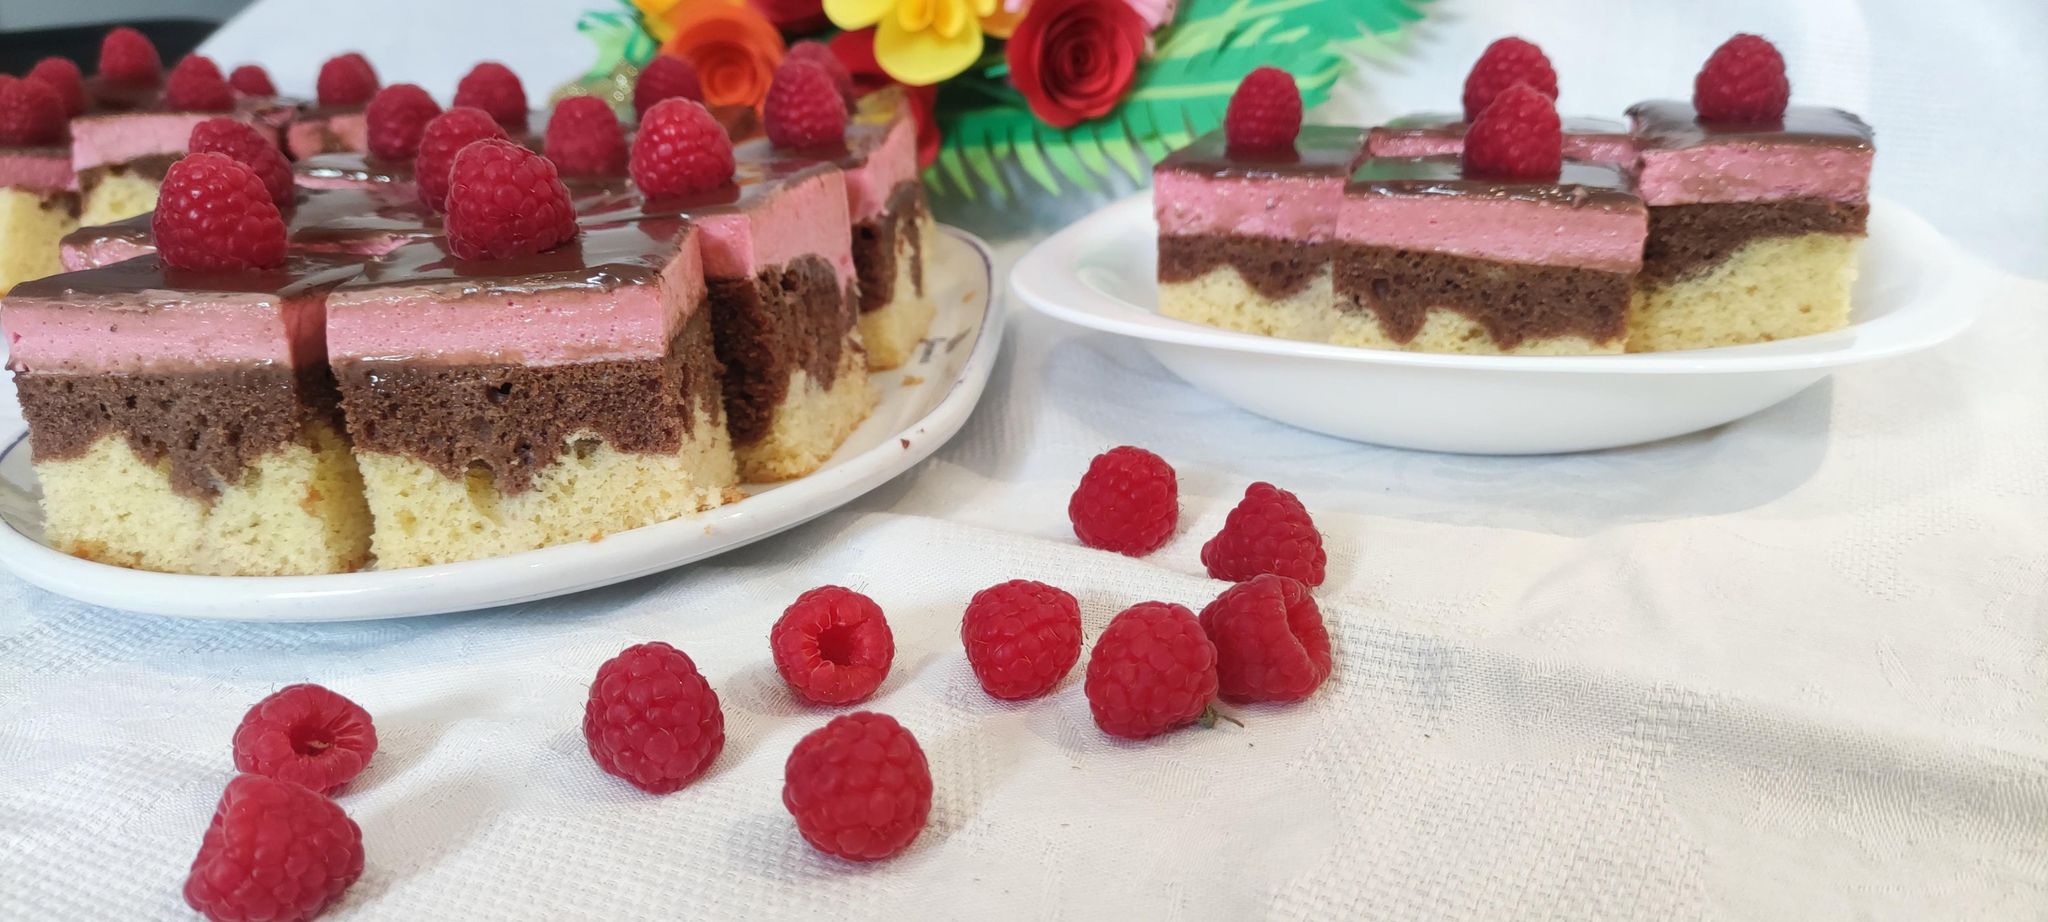 Desert prajitura marmorata cu mousse de fructe rosii si glazura de ciocolata